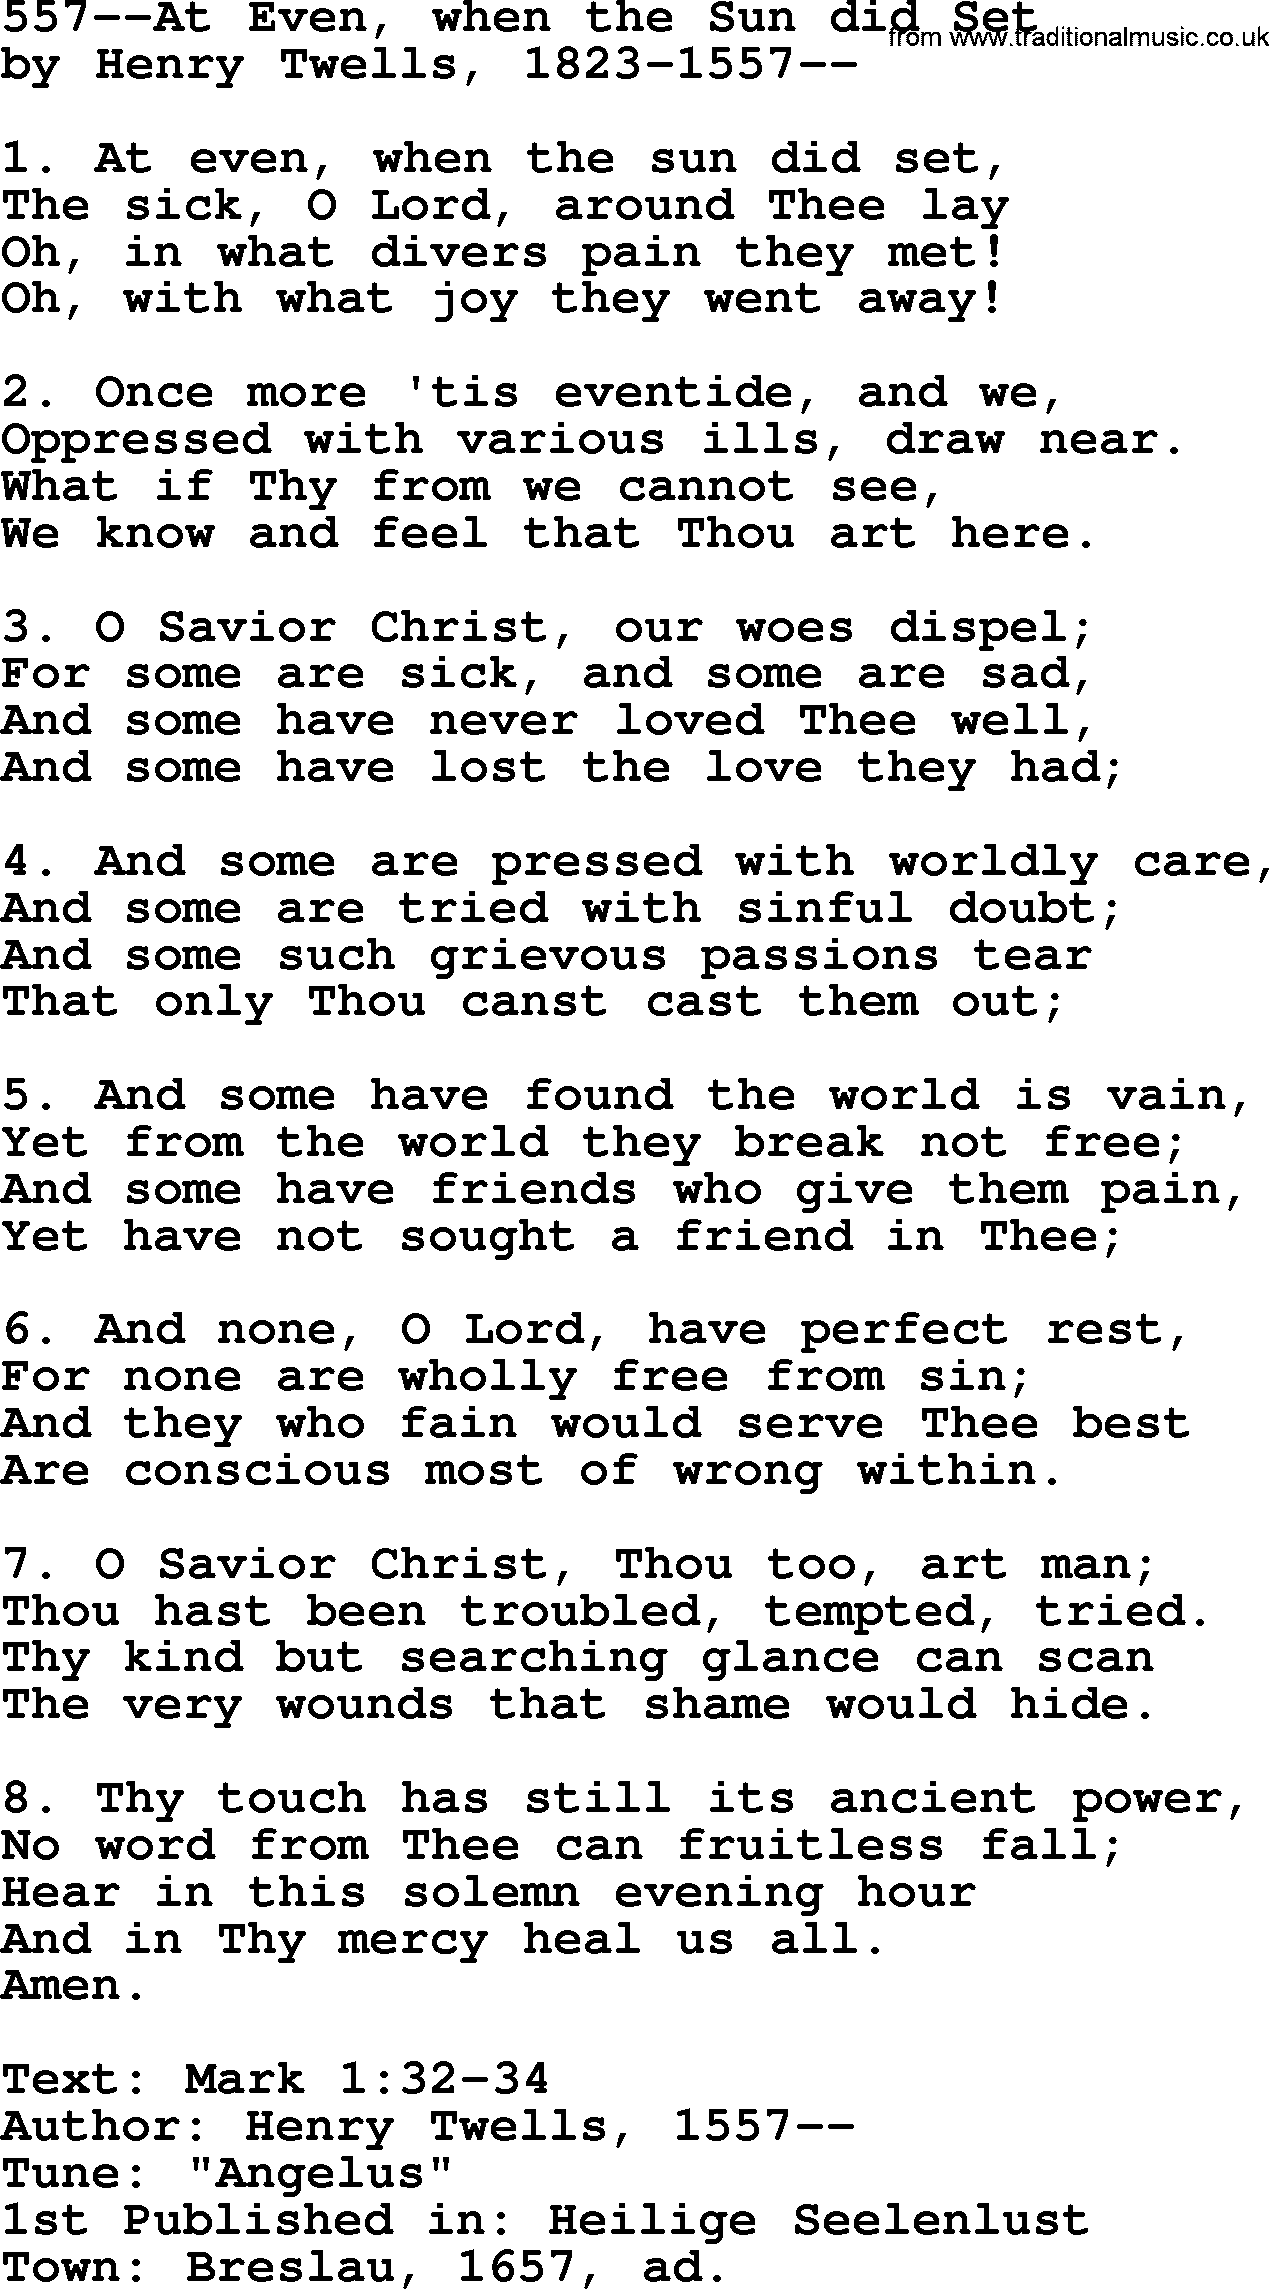 Lutheran Hymn: 557--At Even, when the Sun did Set.txt lyrics with PDF